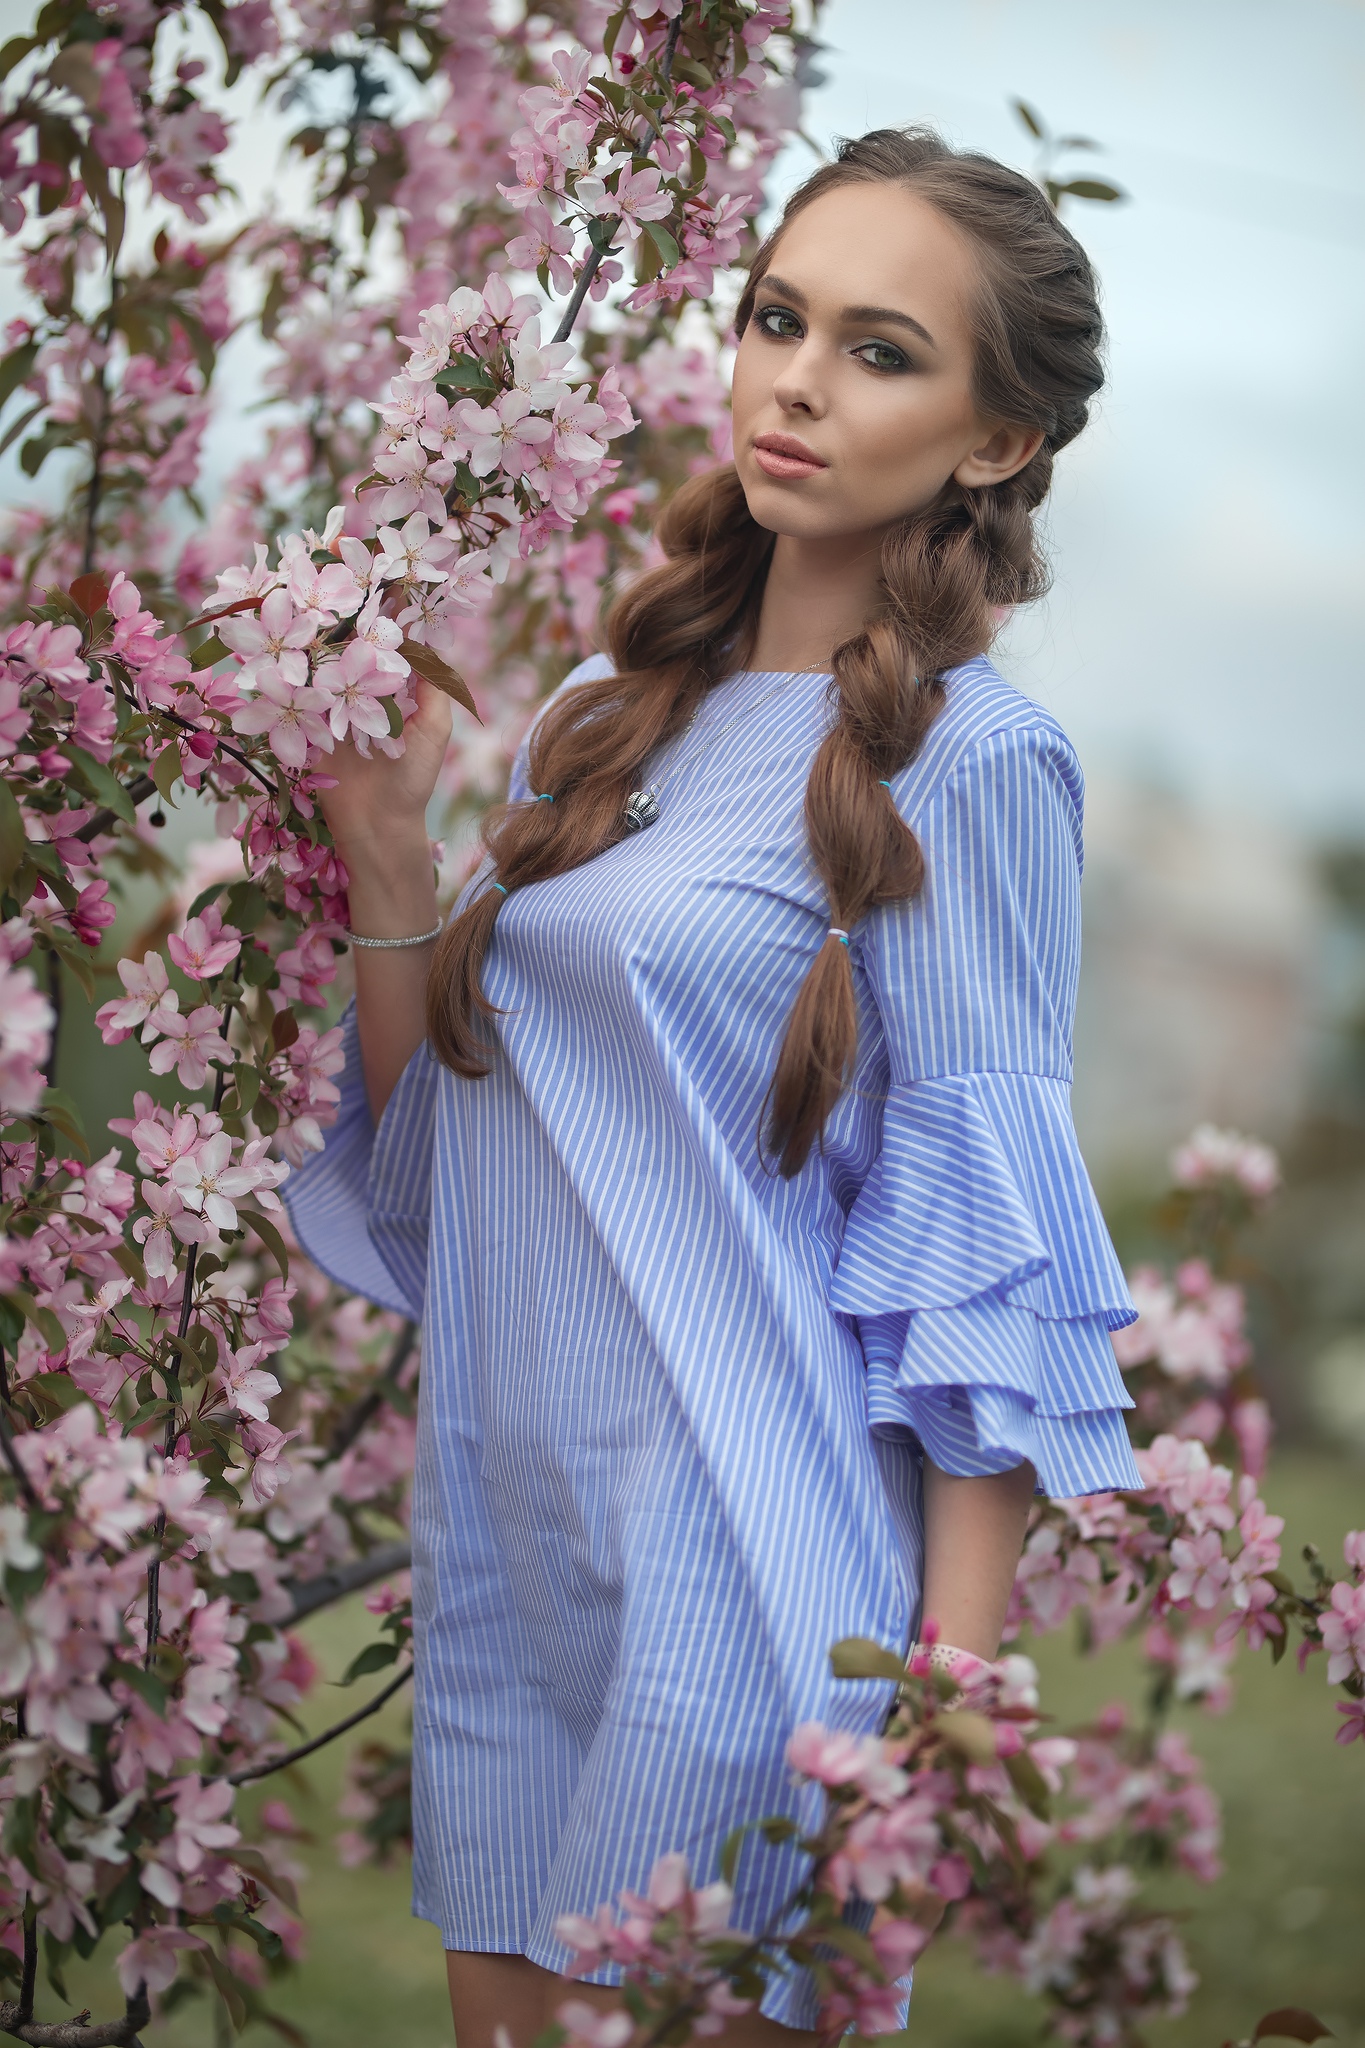 Dmitry Shulgin Women Women Outdoors Brunette Long Hair Braids Striped Clothing Portrait Display 1365x2048